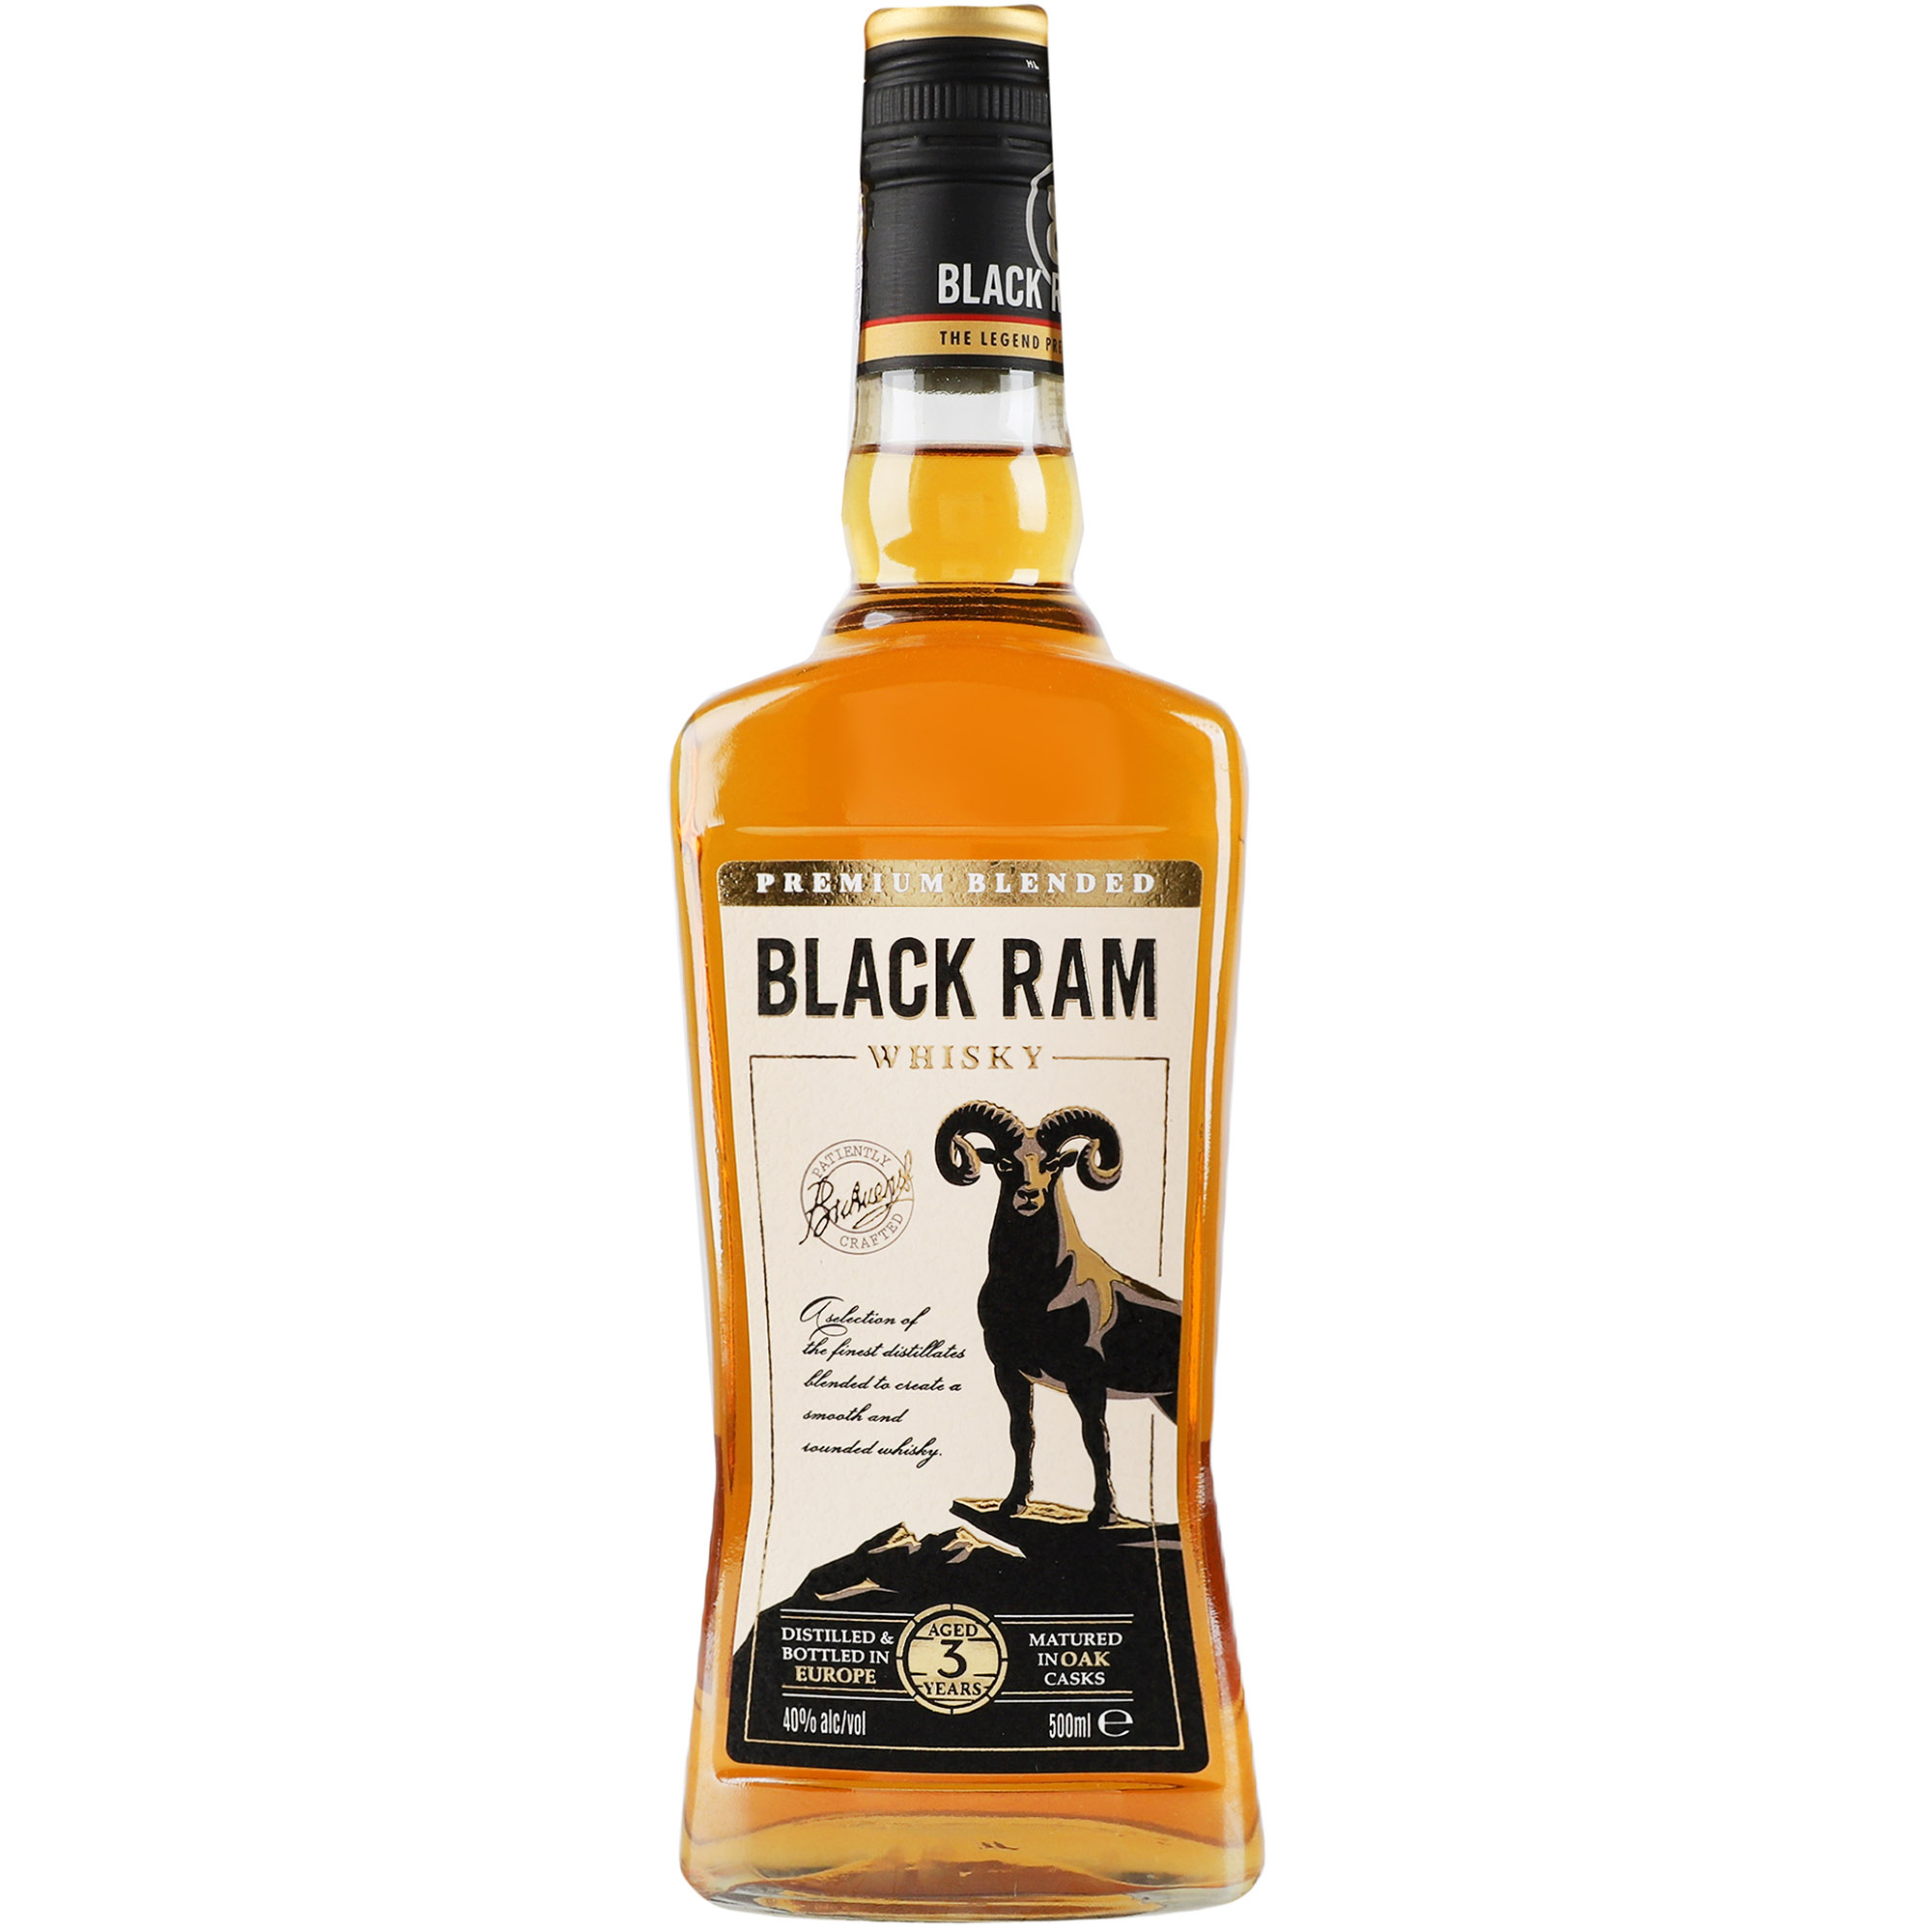 Виски Black Ram 3 yo Premium Blended Whisky 40% 0.5 л - фото 1